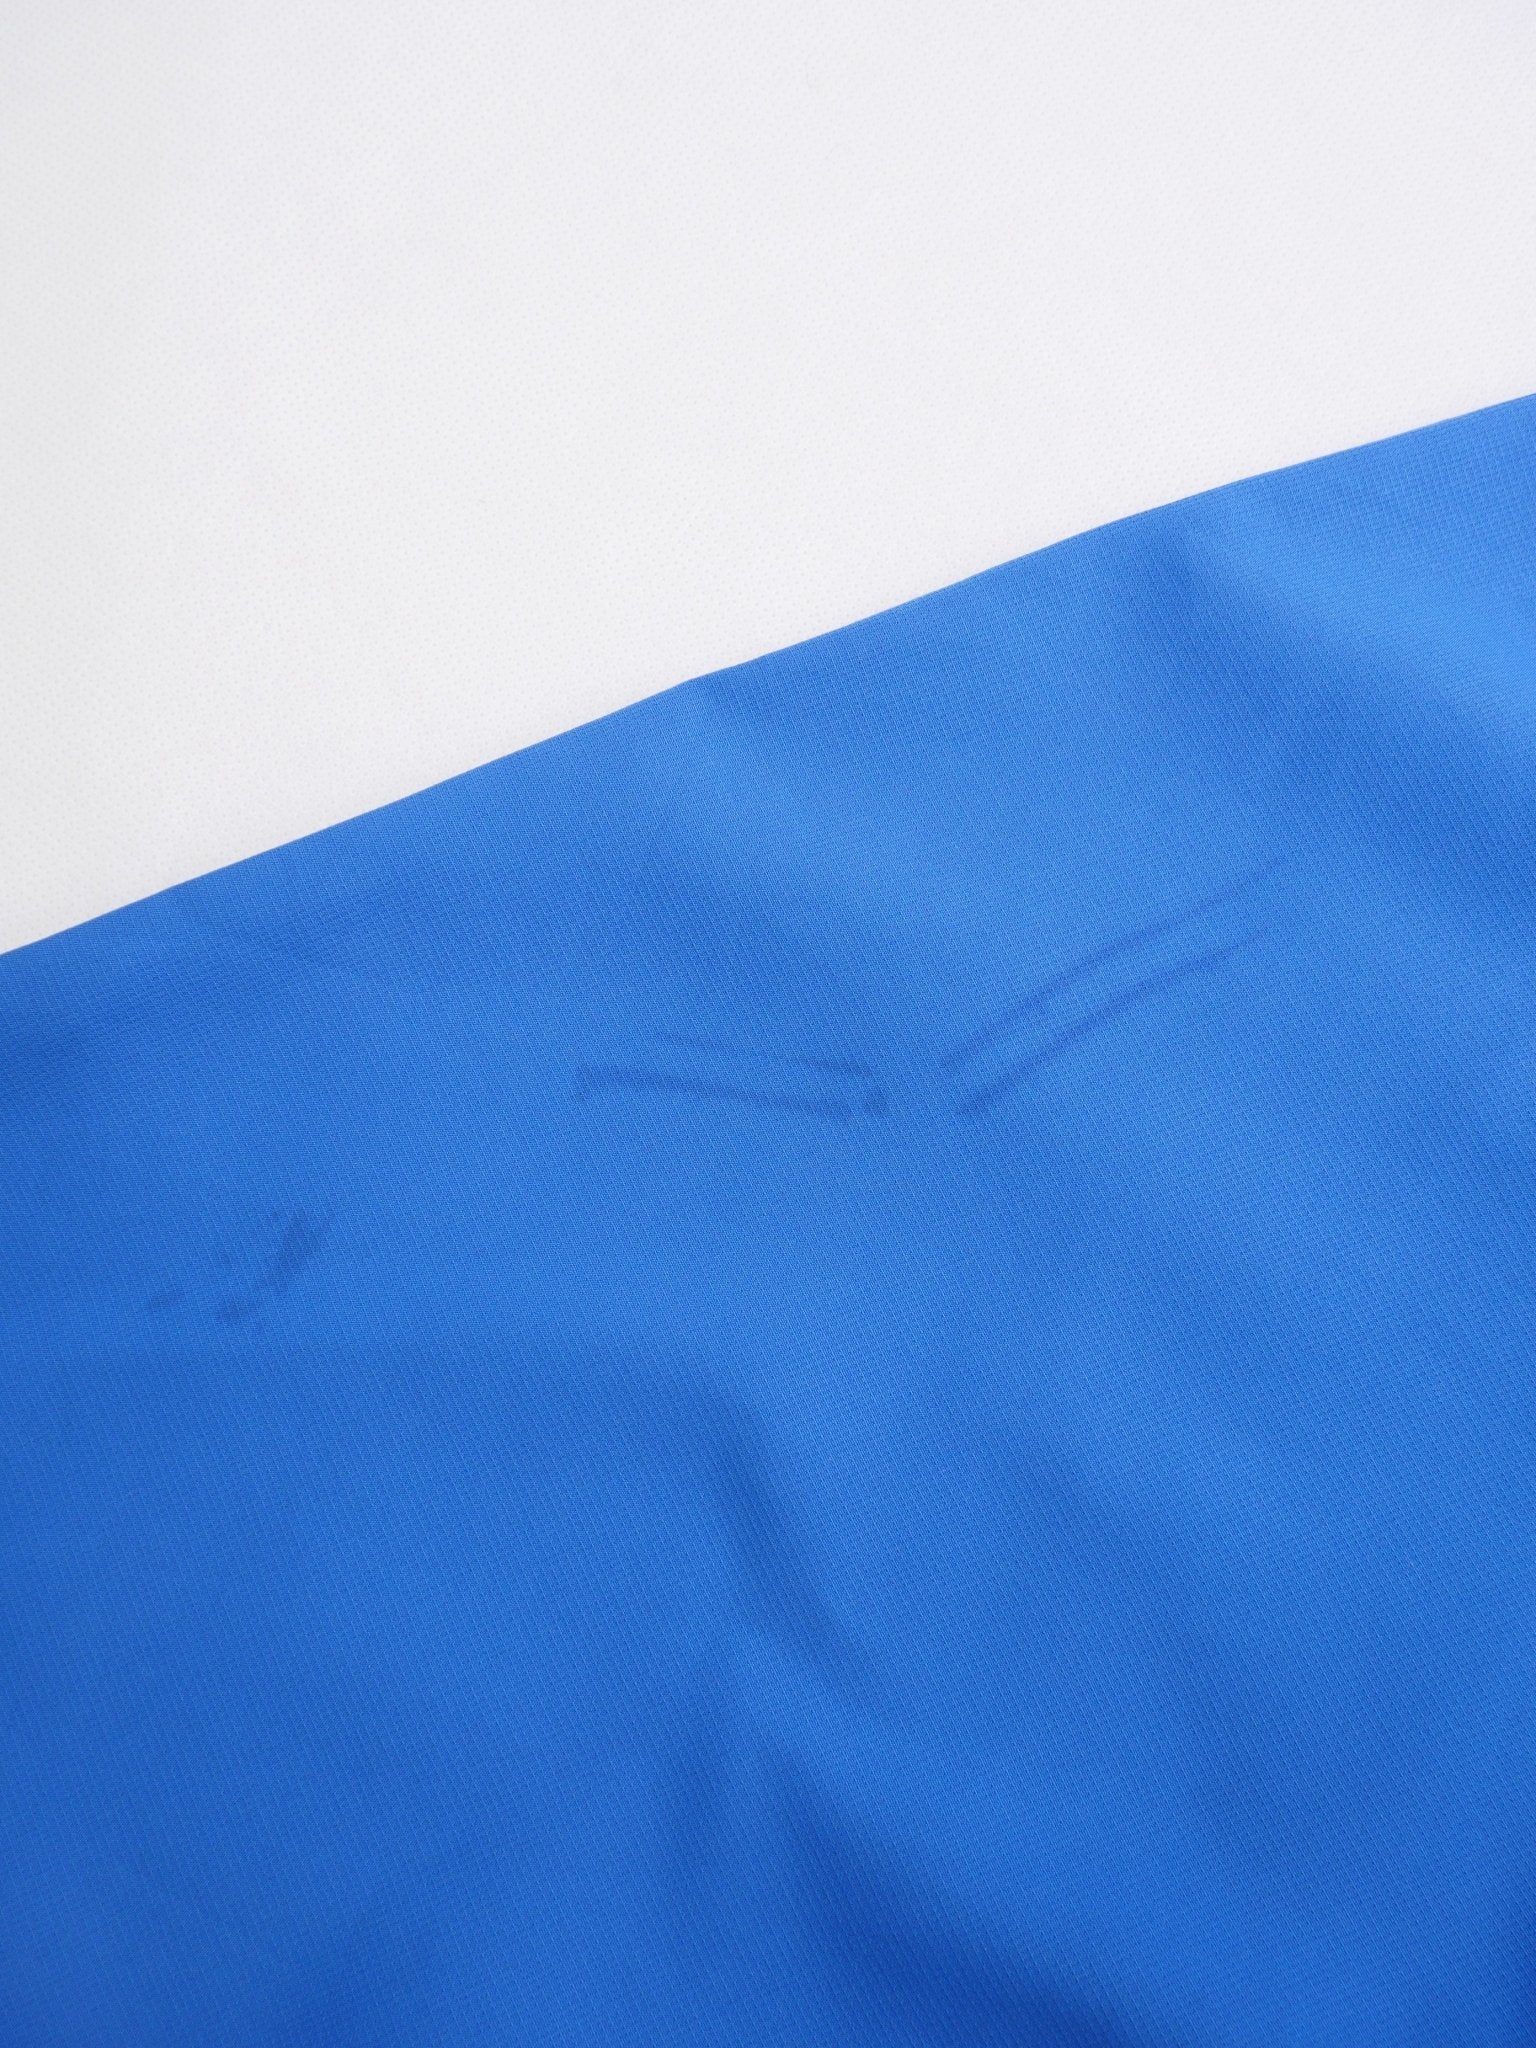 Fila embroidered Logo basic blue Track Jacke - Peeces